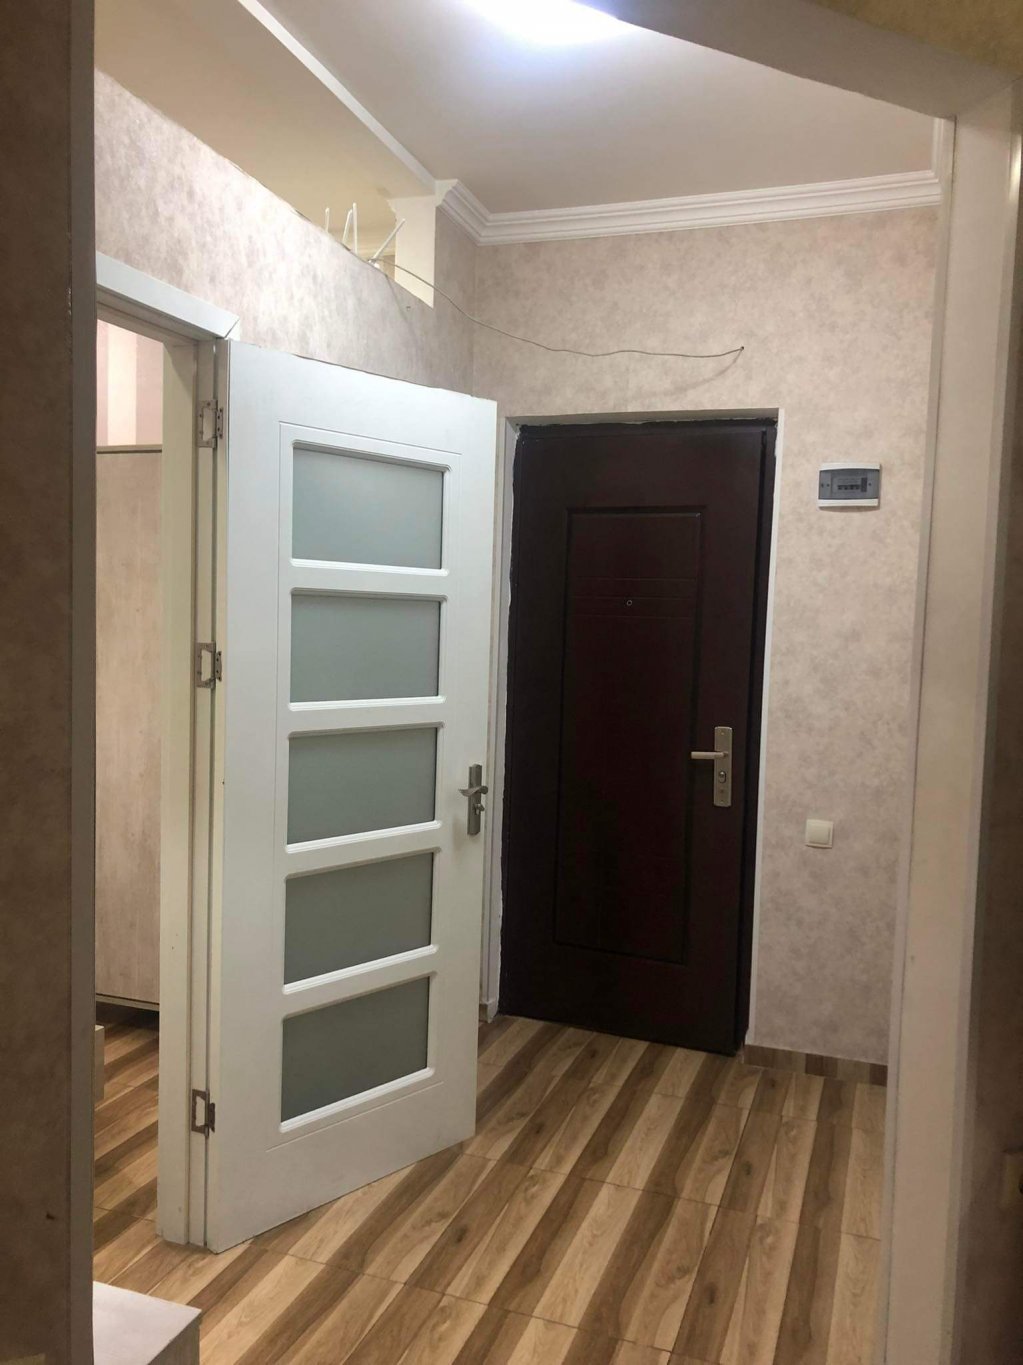 1-bedroom apartment on a street of Gorgasali id-1042 -  rent an apartment in Batumi